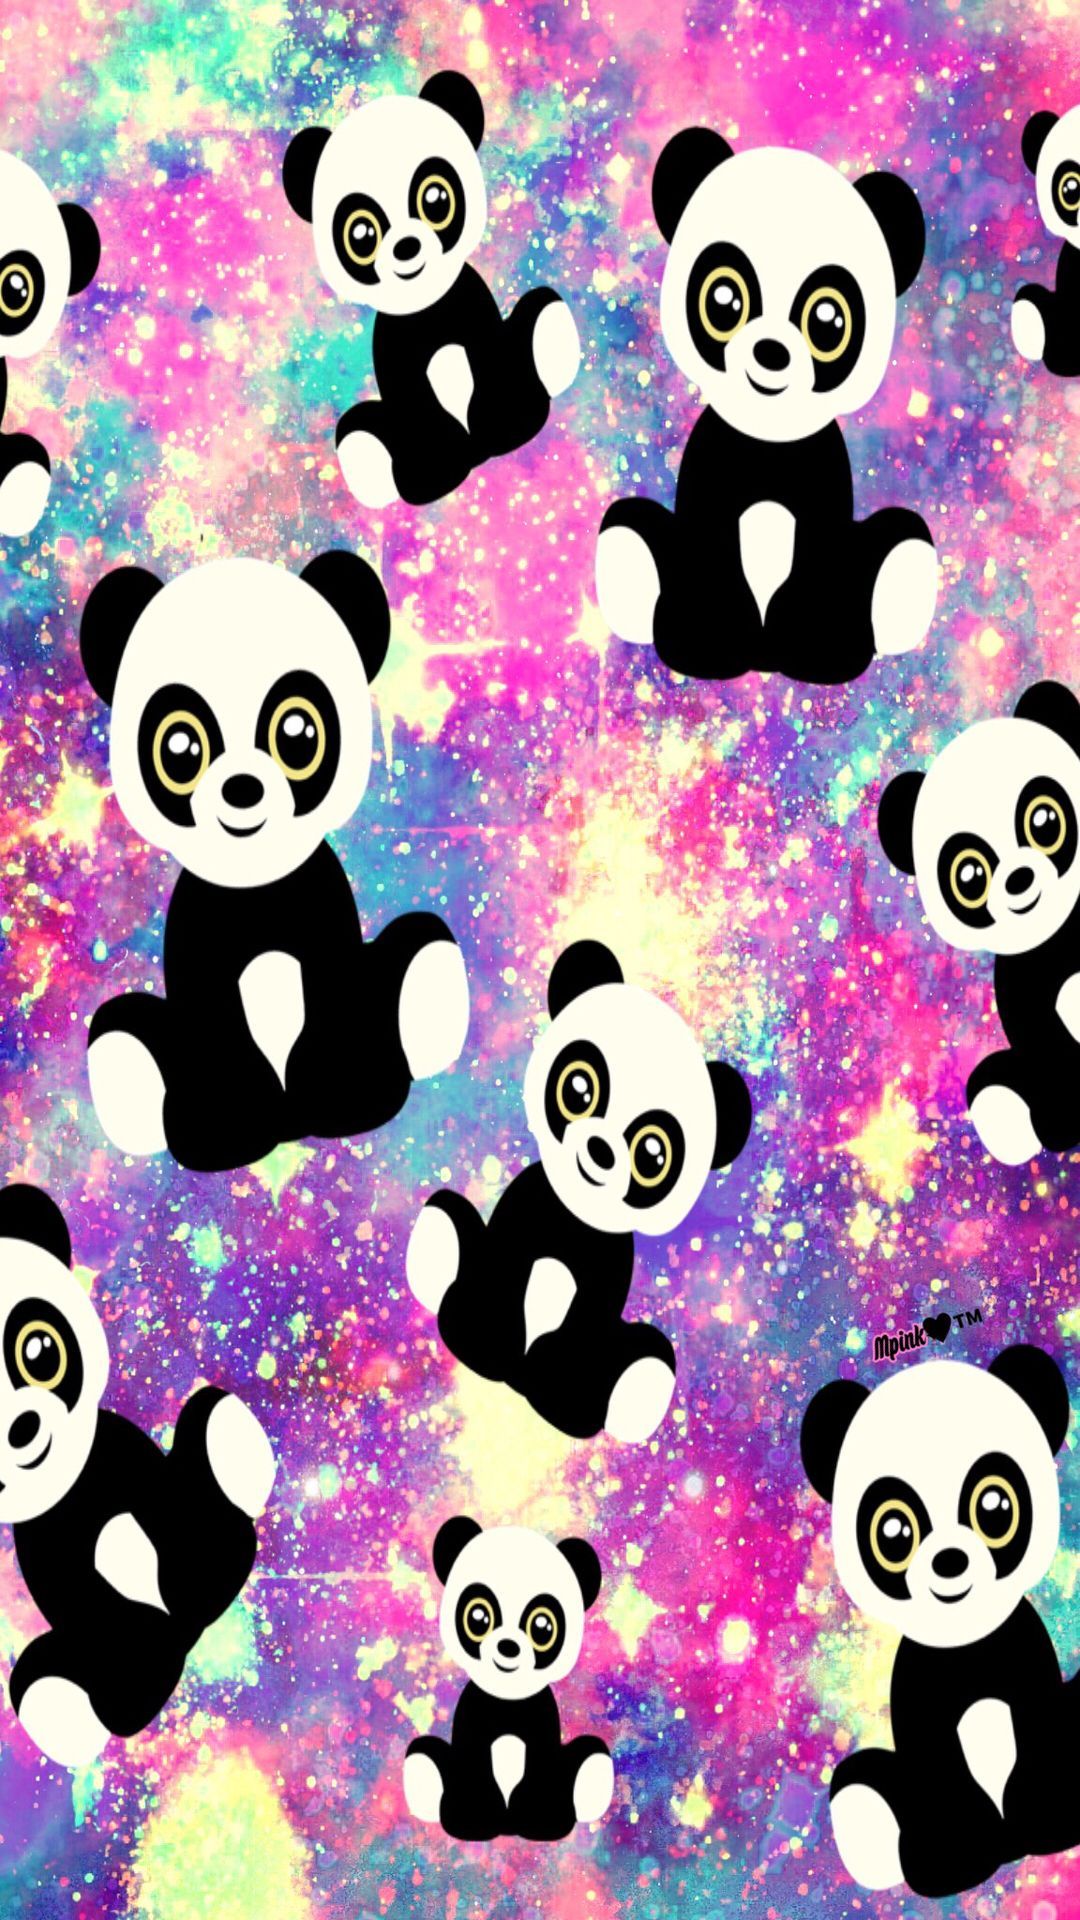 Cute Panda Galaxy Wallpaper #androidwallpaper #iphonewallpaper #wallpaper #galaxy #sparkle #glitte. Pink wallpaper anime, iPhone wallpaper girly, Panda wallpaper